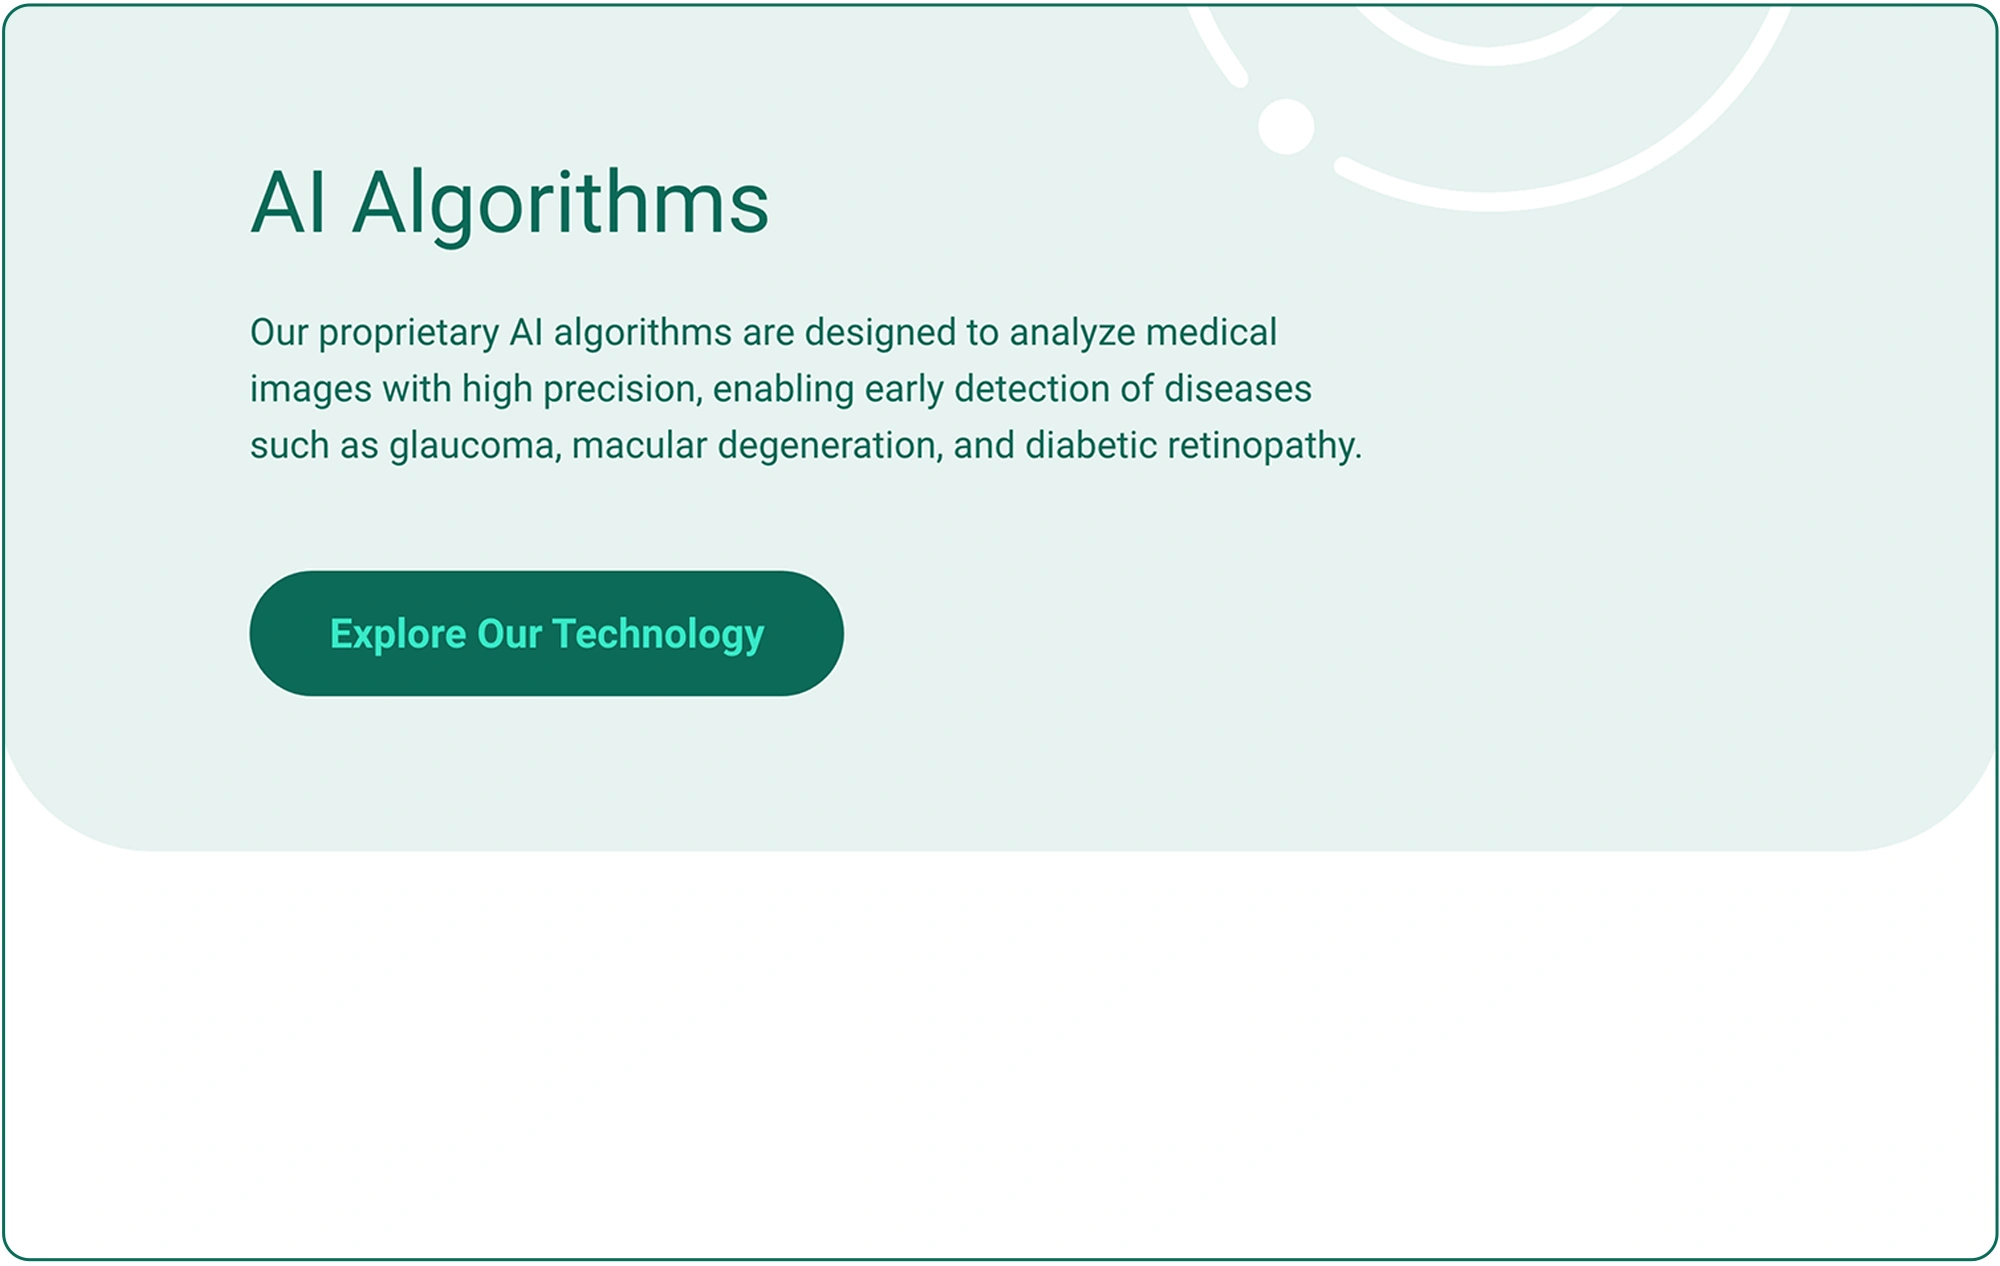 AI algorithms webpage for an eye health care company.